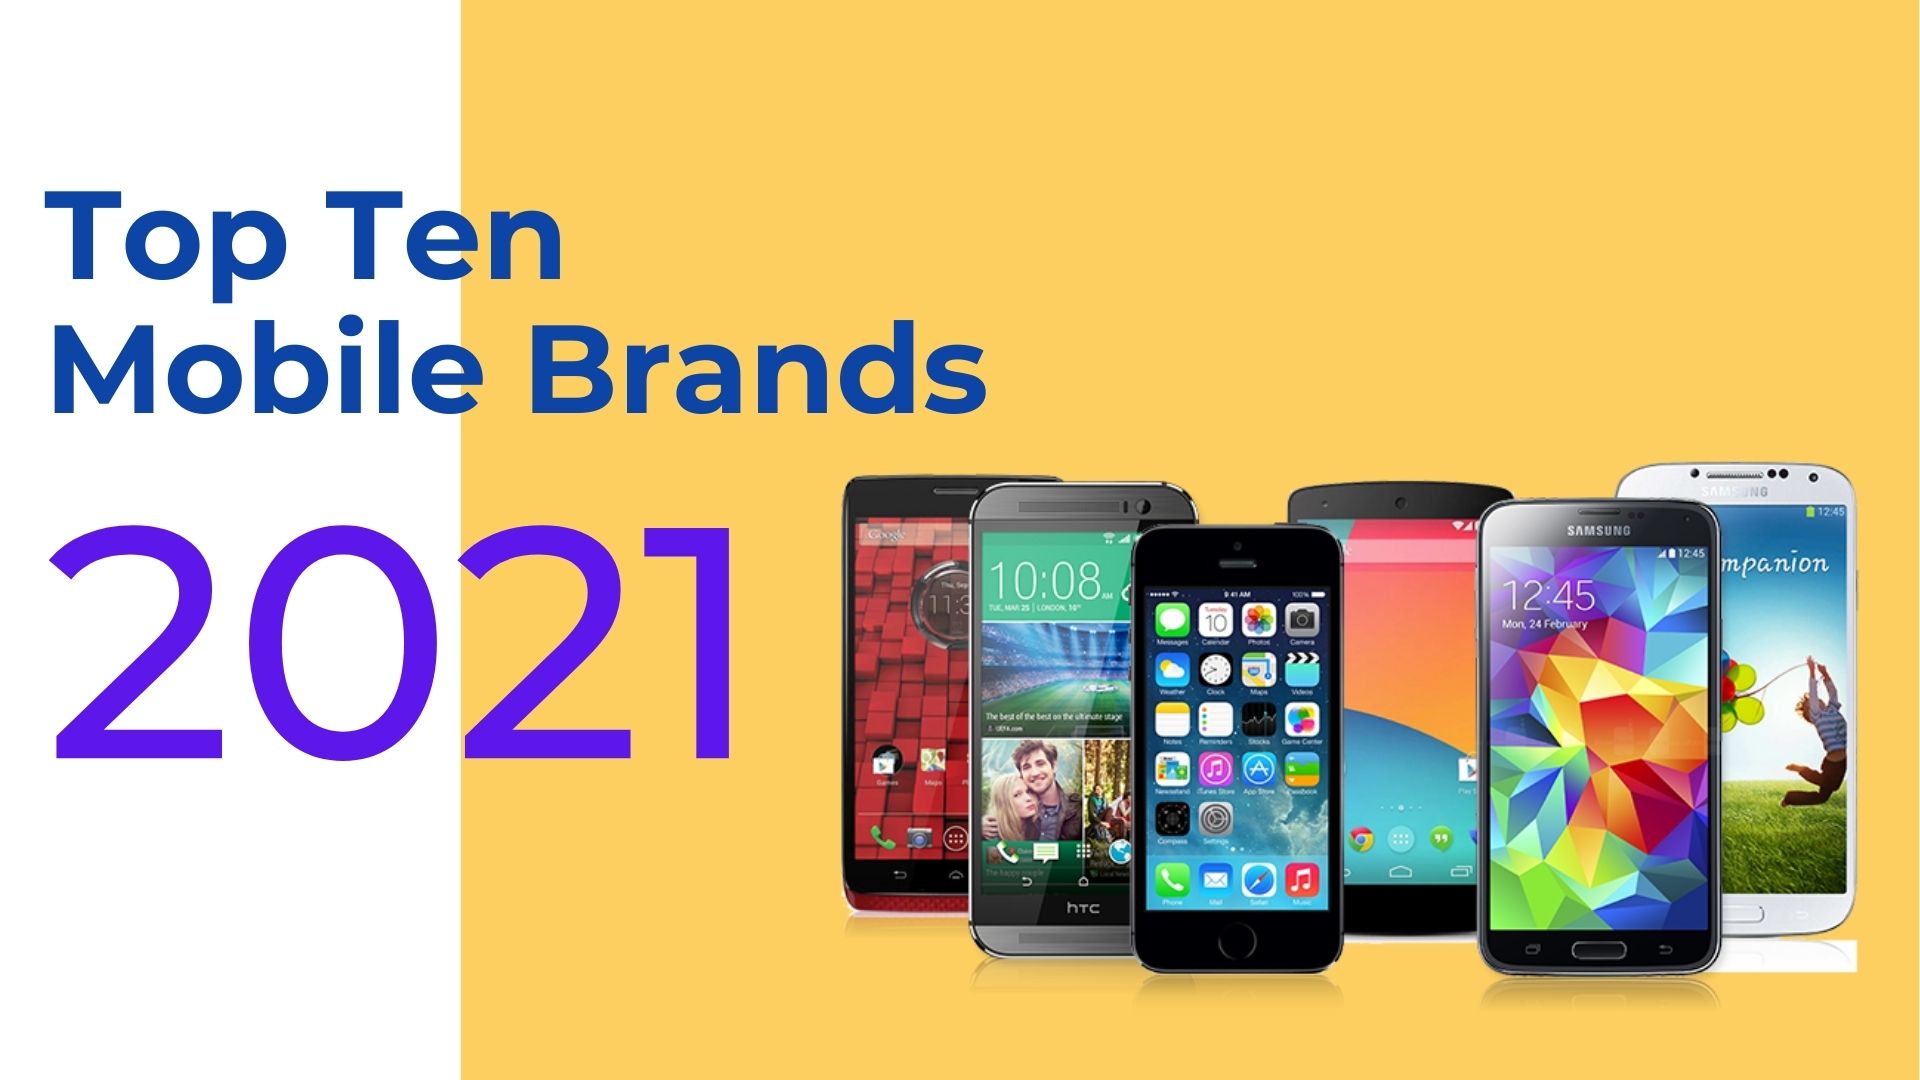 Top Ten Mobile Brands in the World 2021